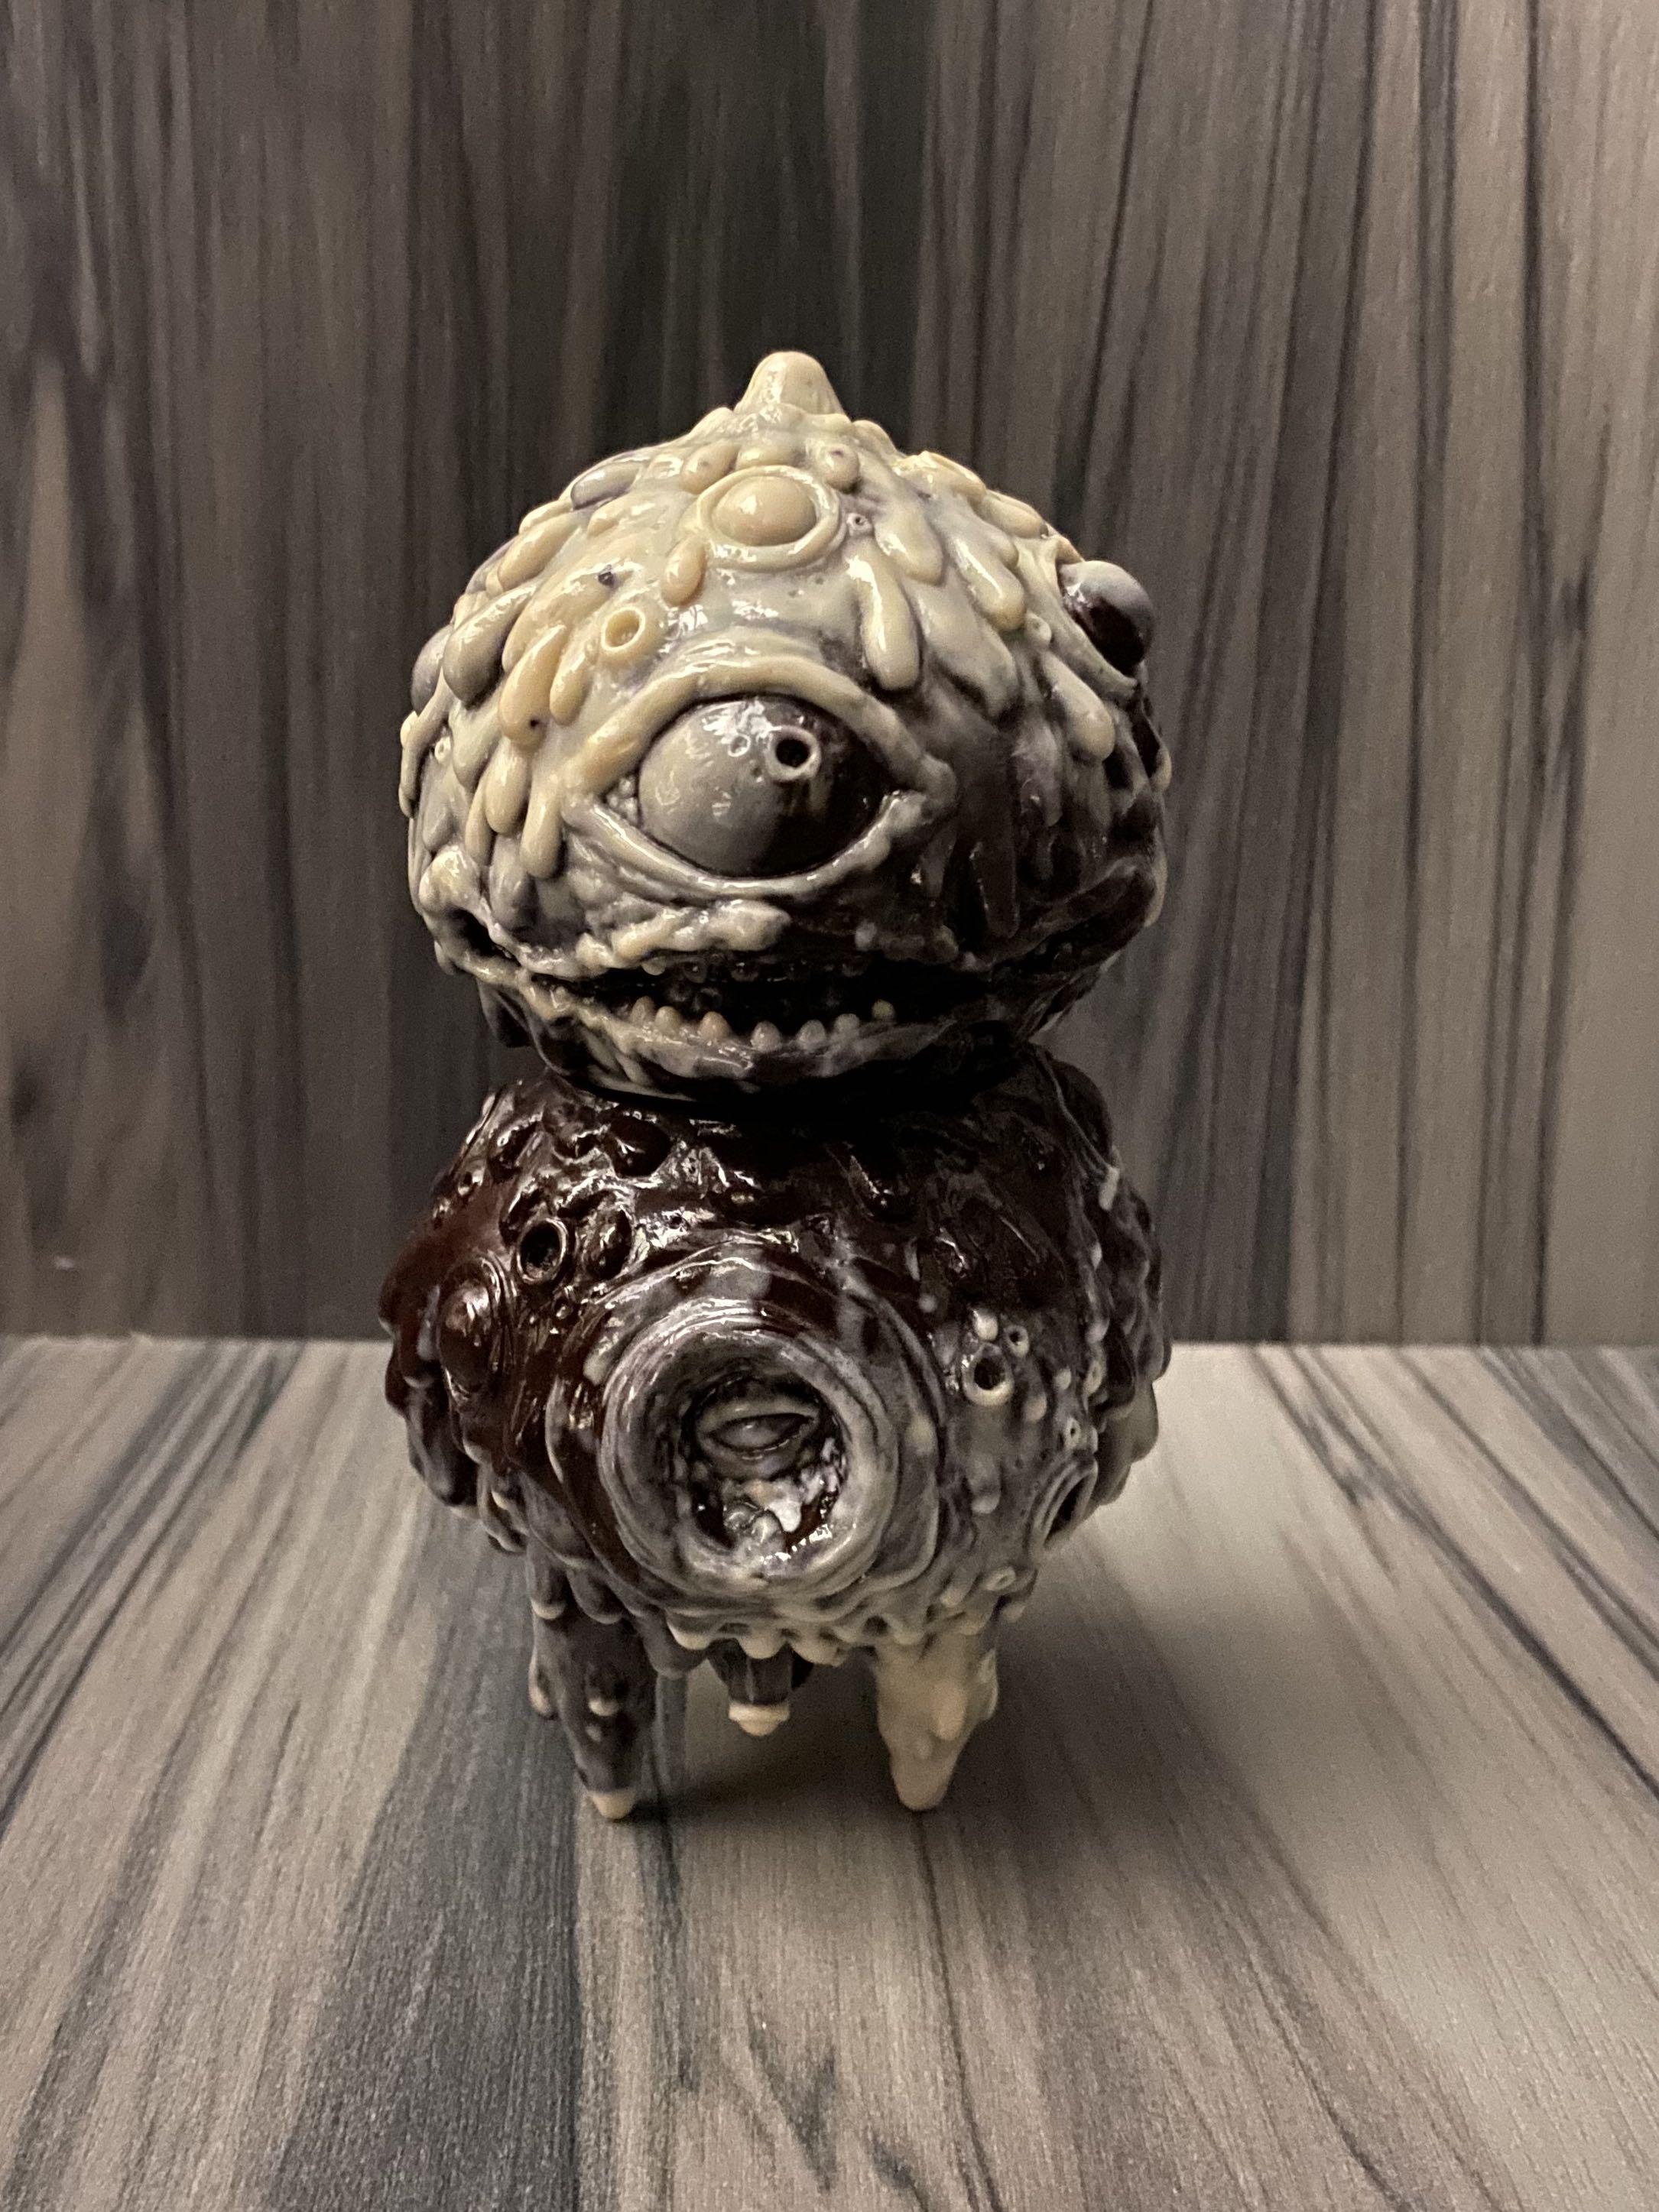 Kaijutan mimimonster marbled sofubi 搪膠邪膠黑白混素, 興趣及遊戲 